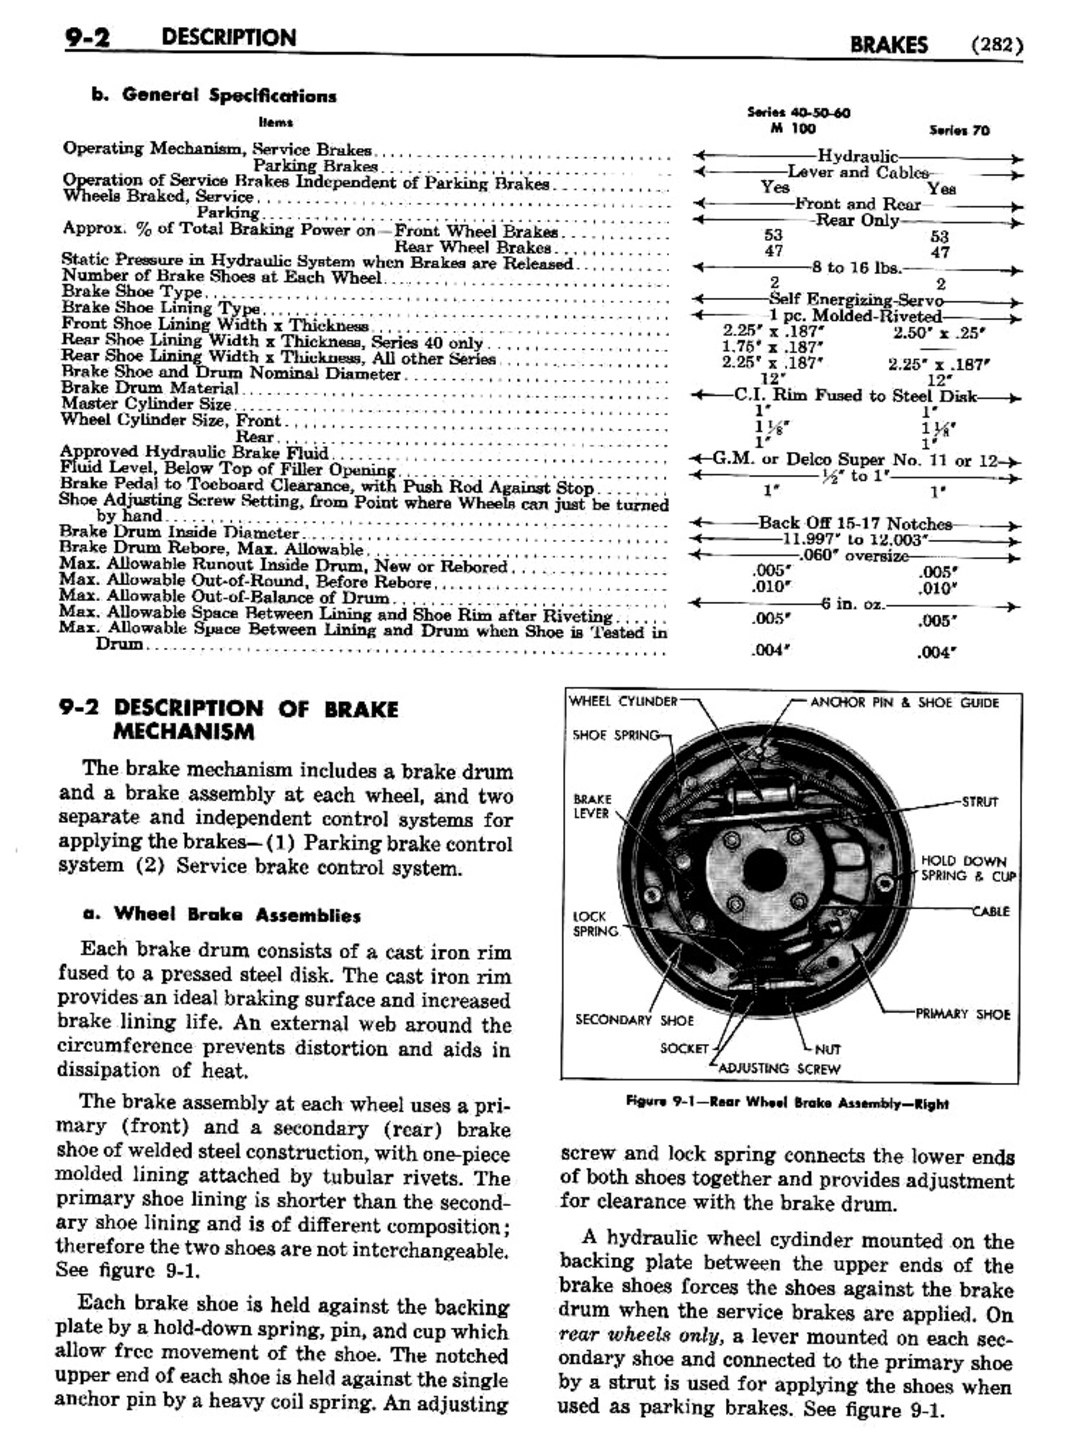 n_10 1954 Buick Shop Manual - Brakes-002-002.jpg